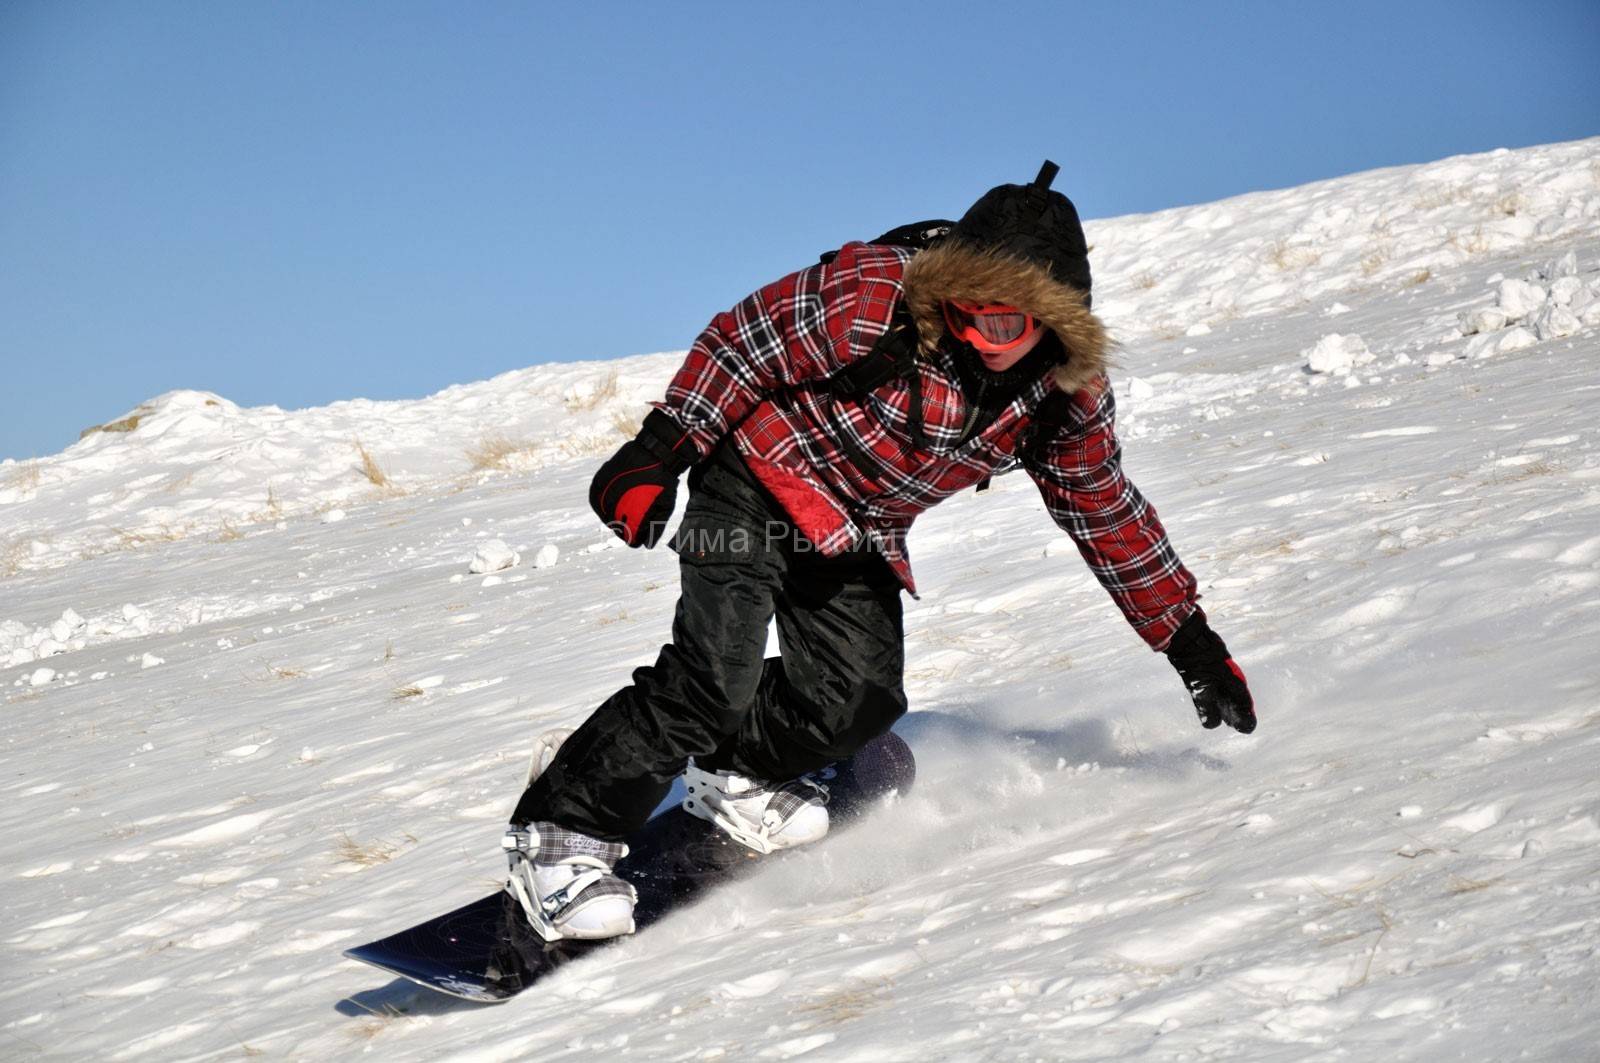 Сноуборд: существующие виды и техника катания